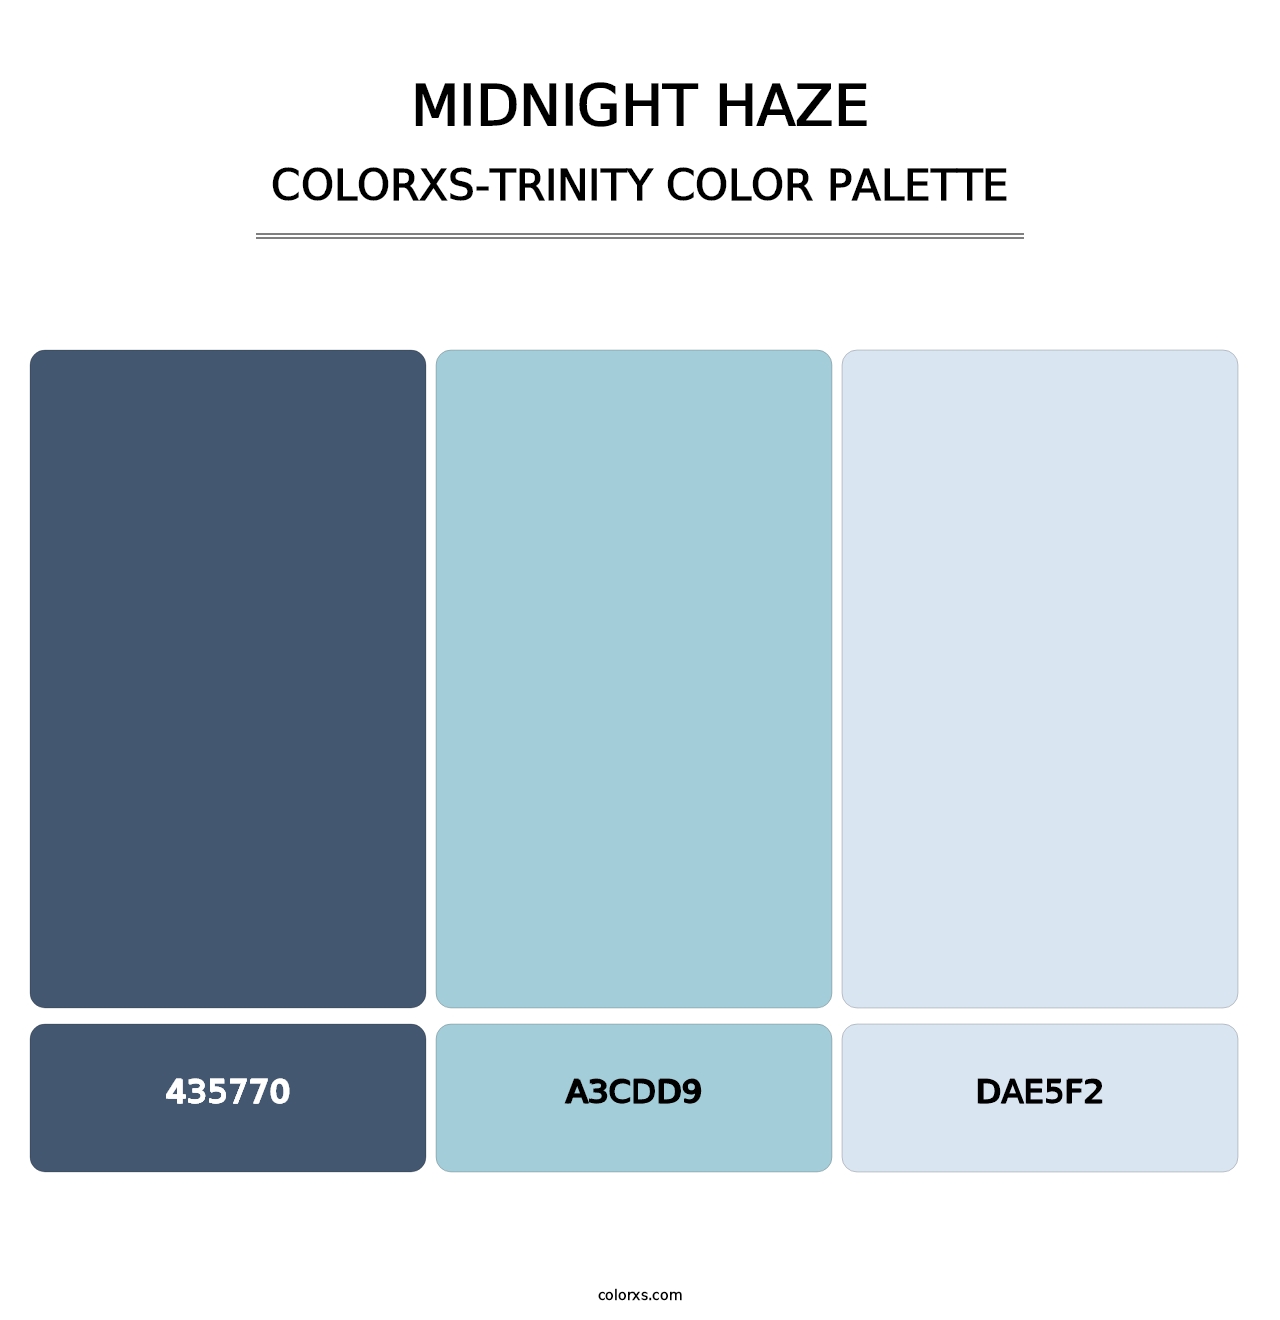 Midnight Haze - Colorxs Trinity Palette